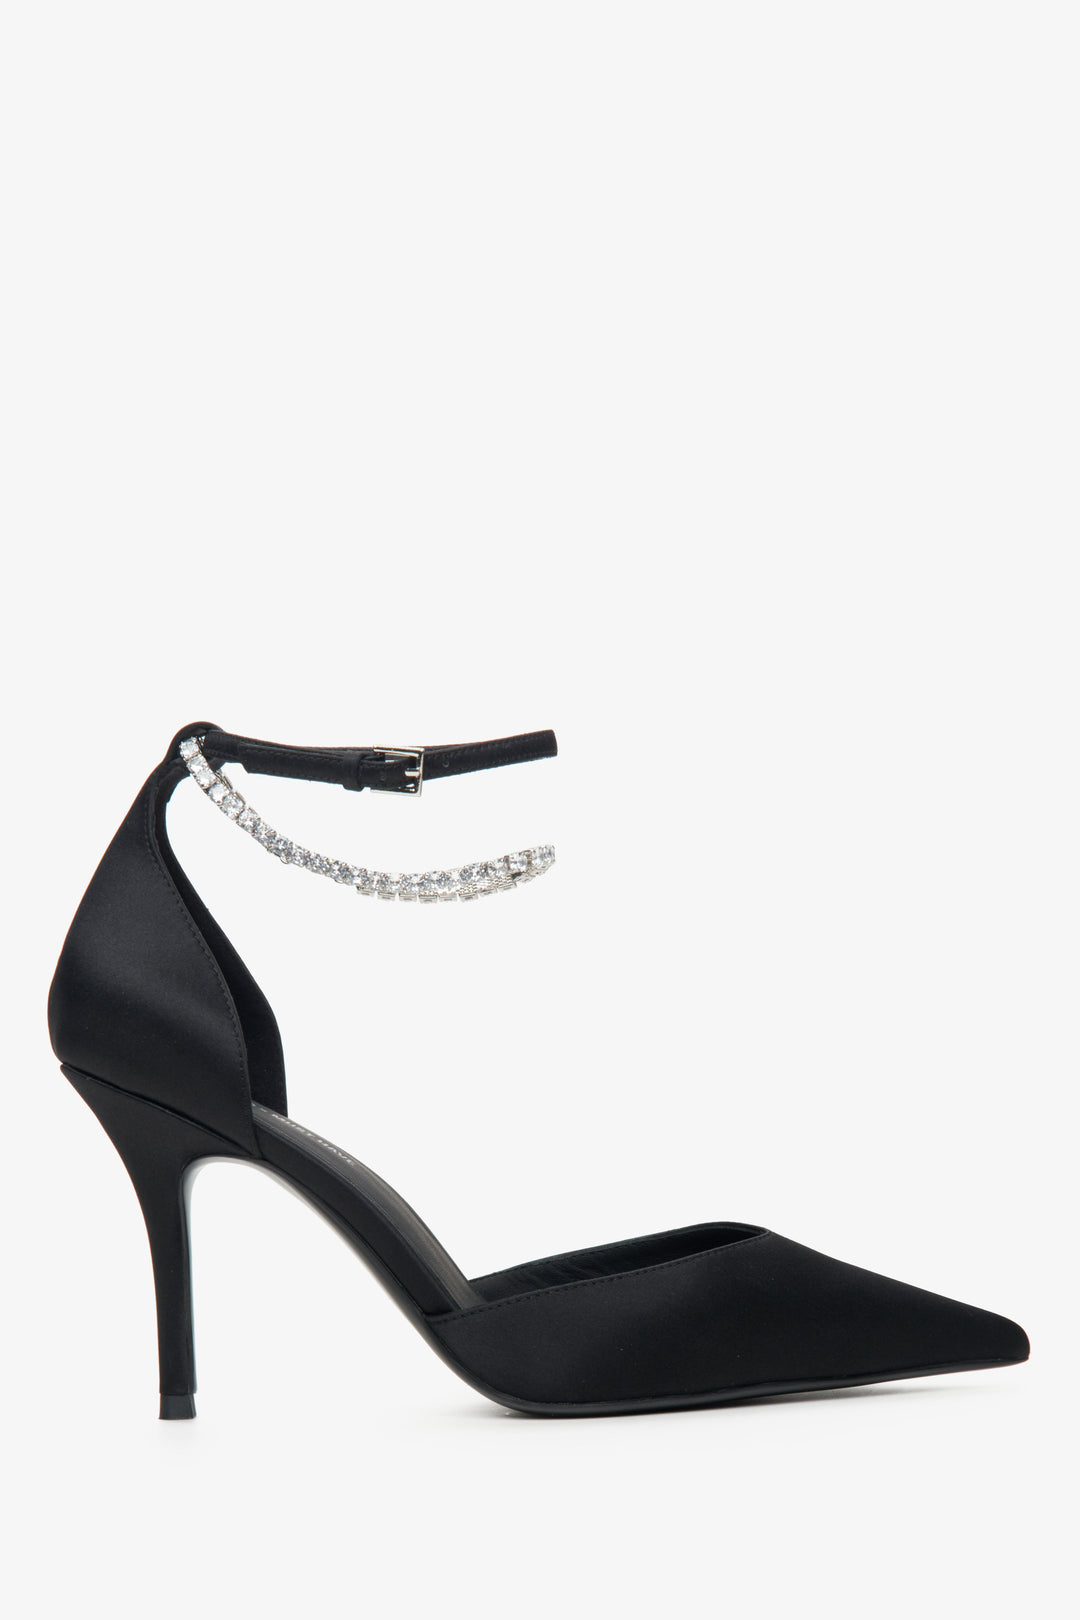 Stylish women's black pumps by Estro x MustHave - shoe profile.